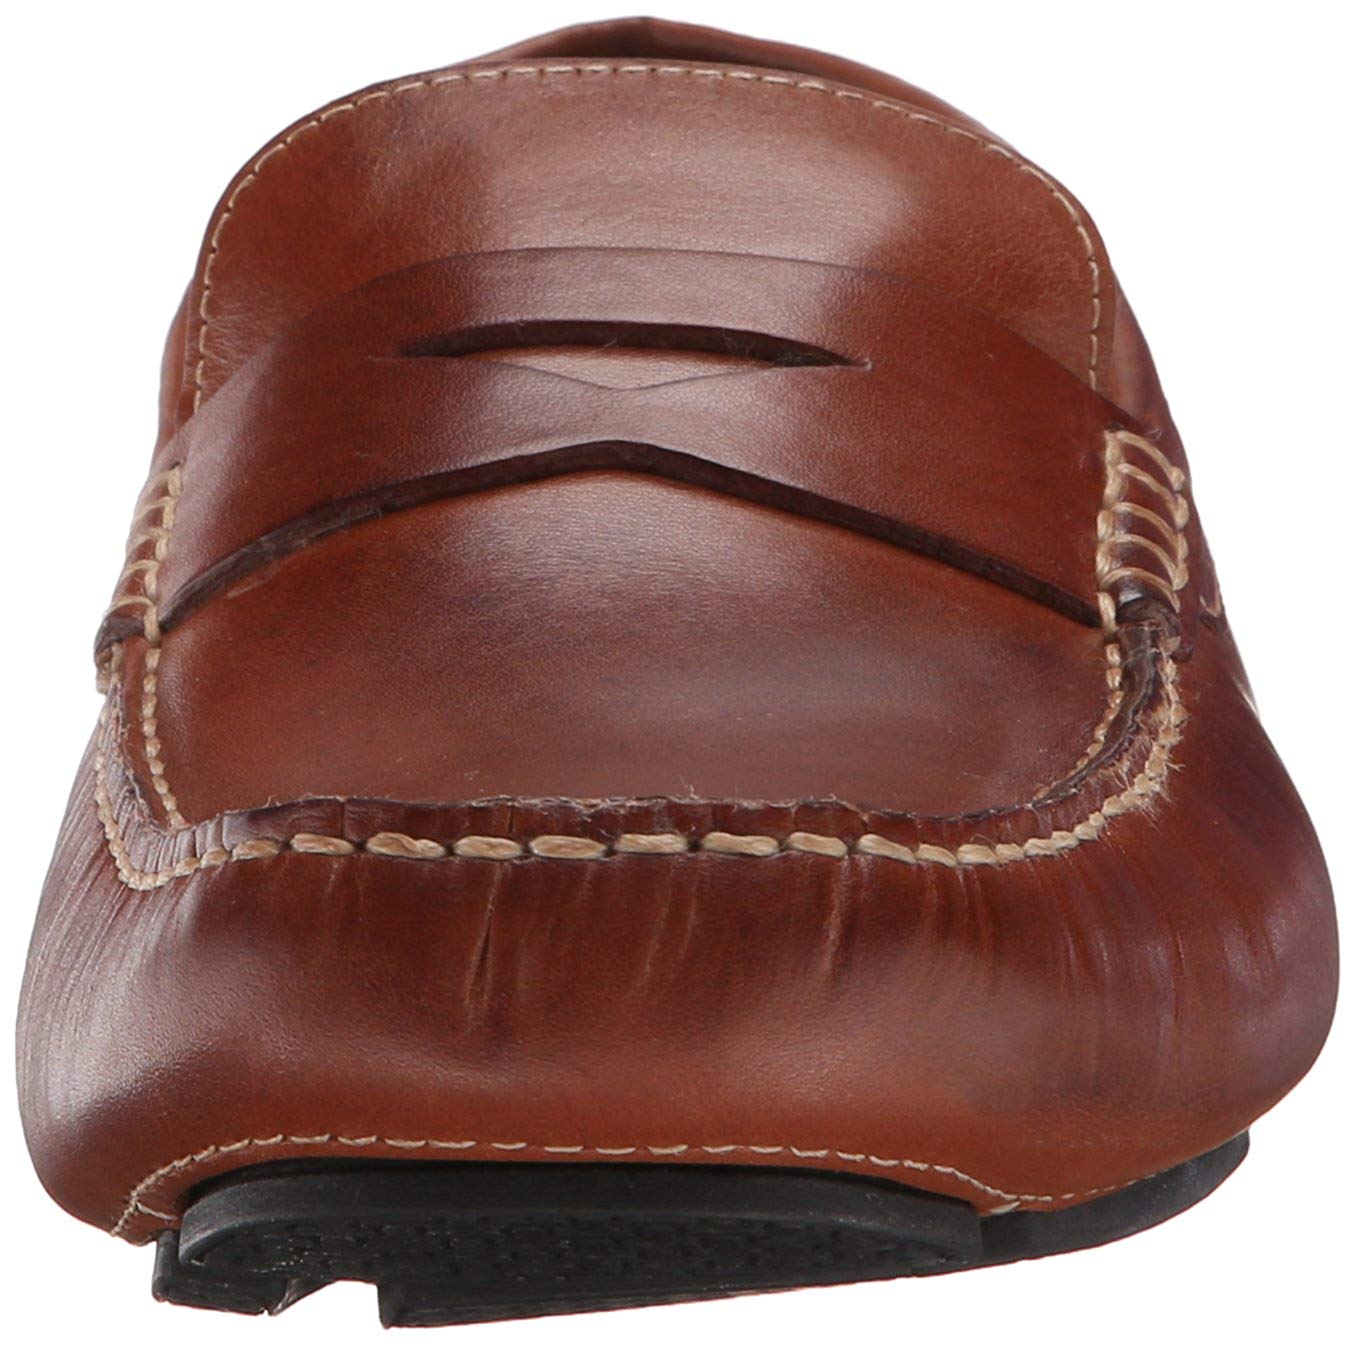 Cole Haan Men's Howland Penny Loafer, Saddle Tan, Size 12.0 JBzO | eBay